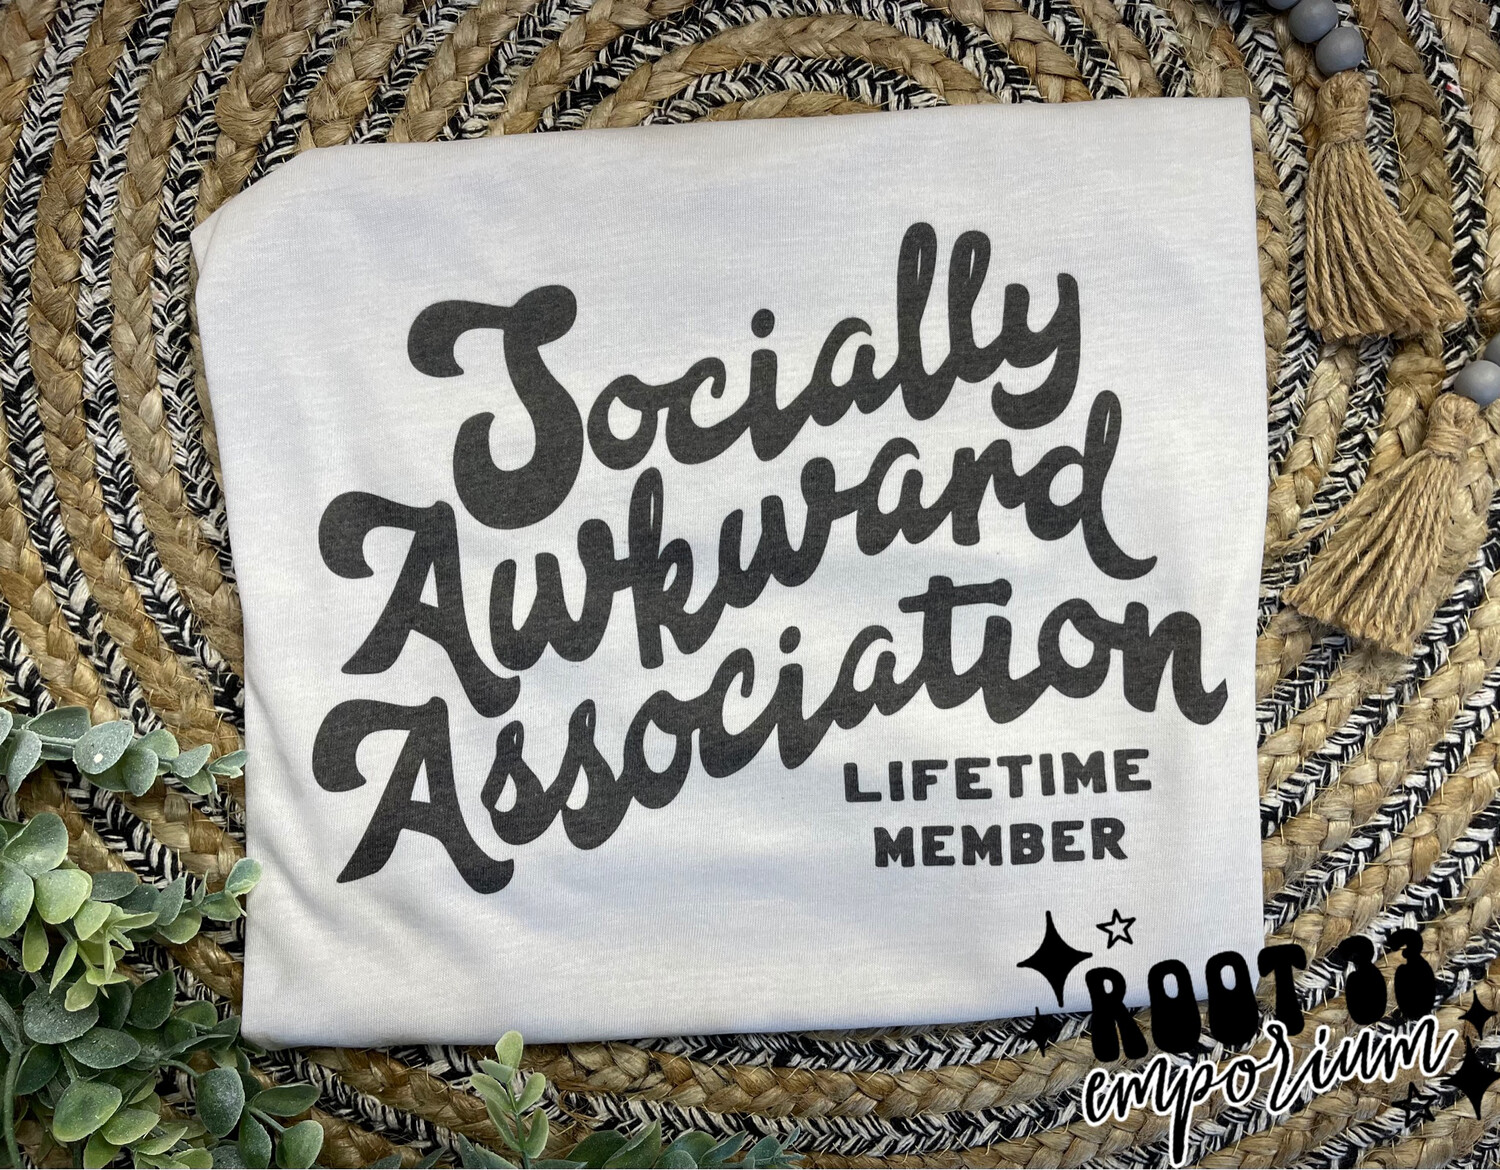 Socially Awkward Association 